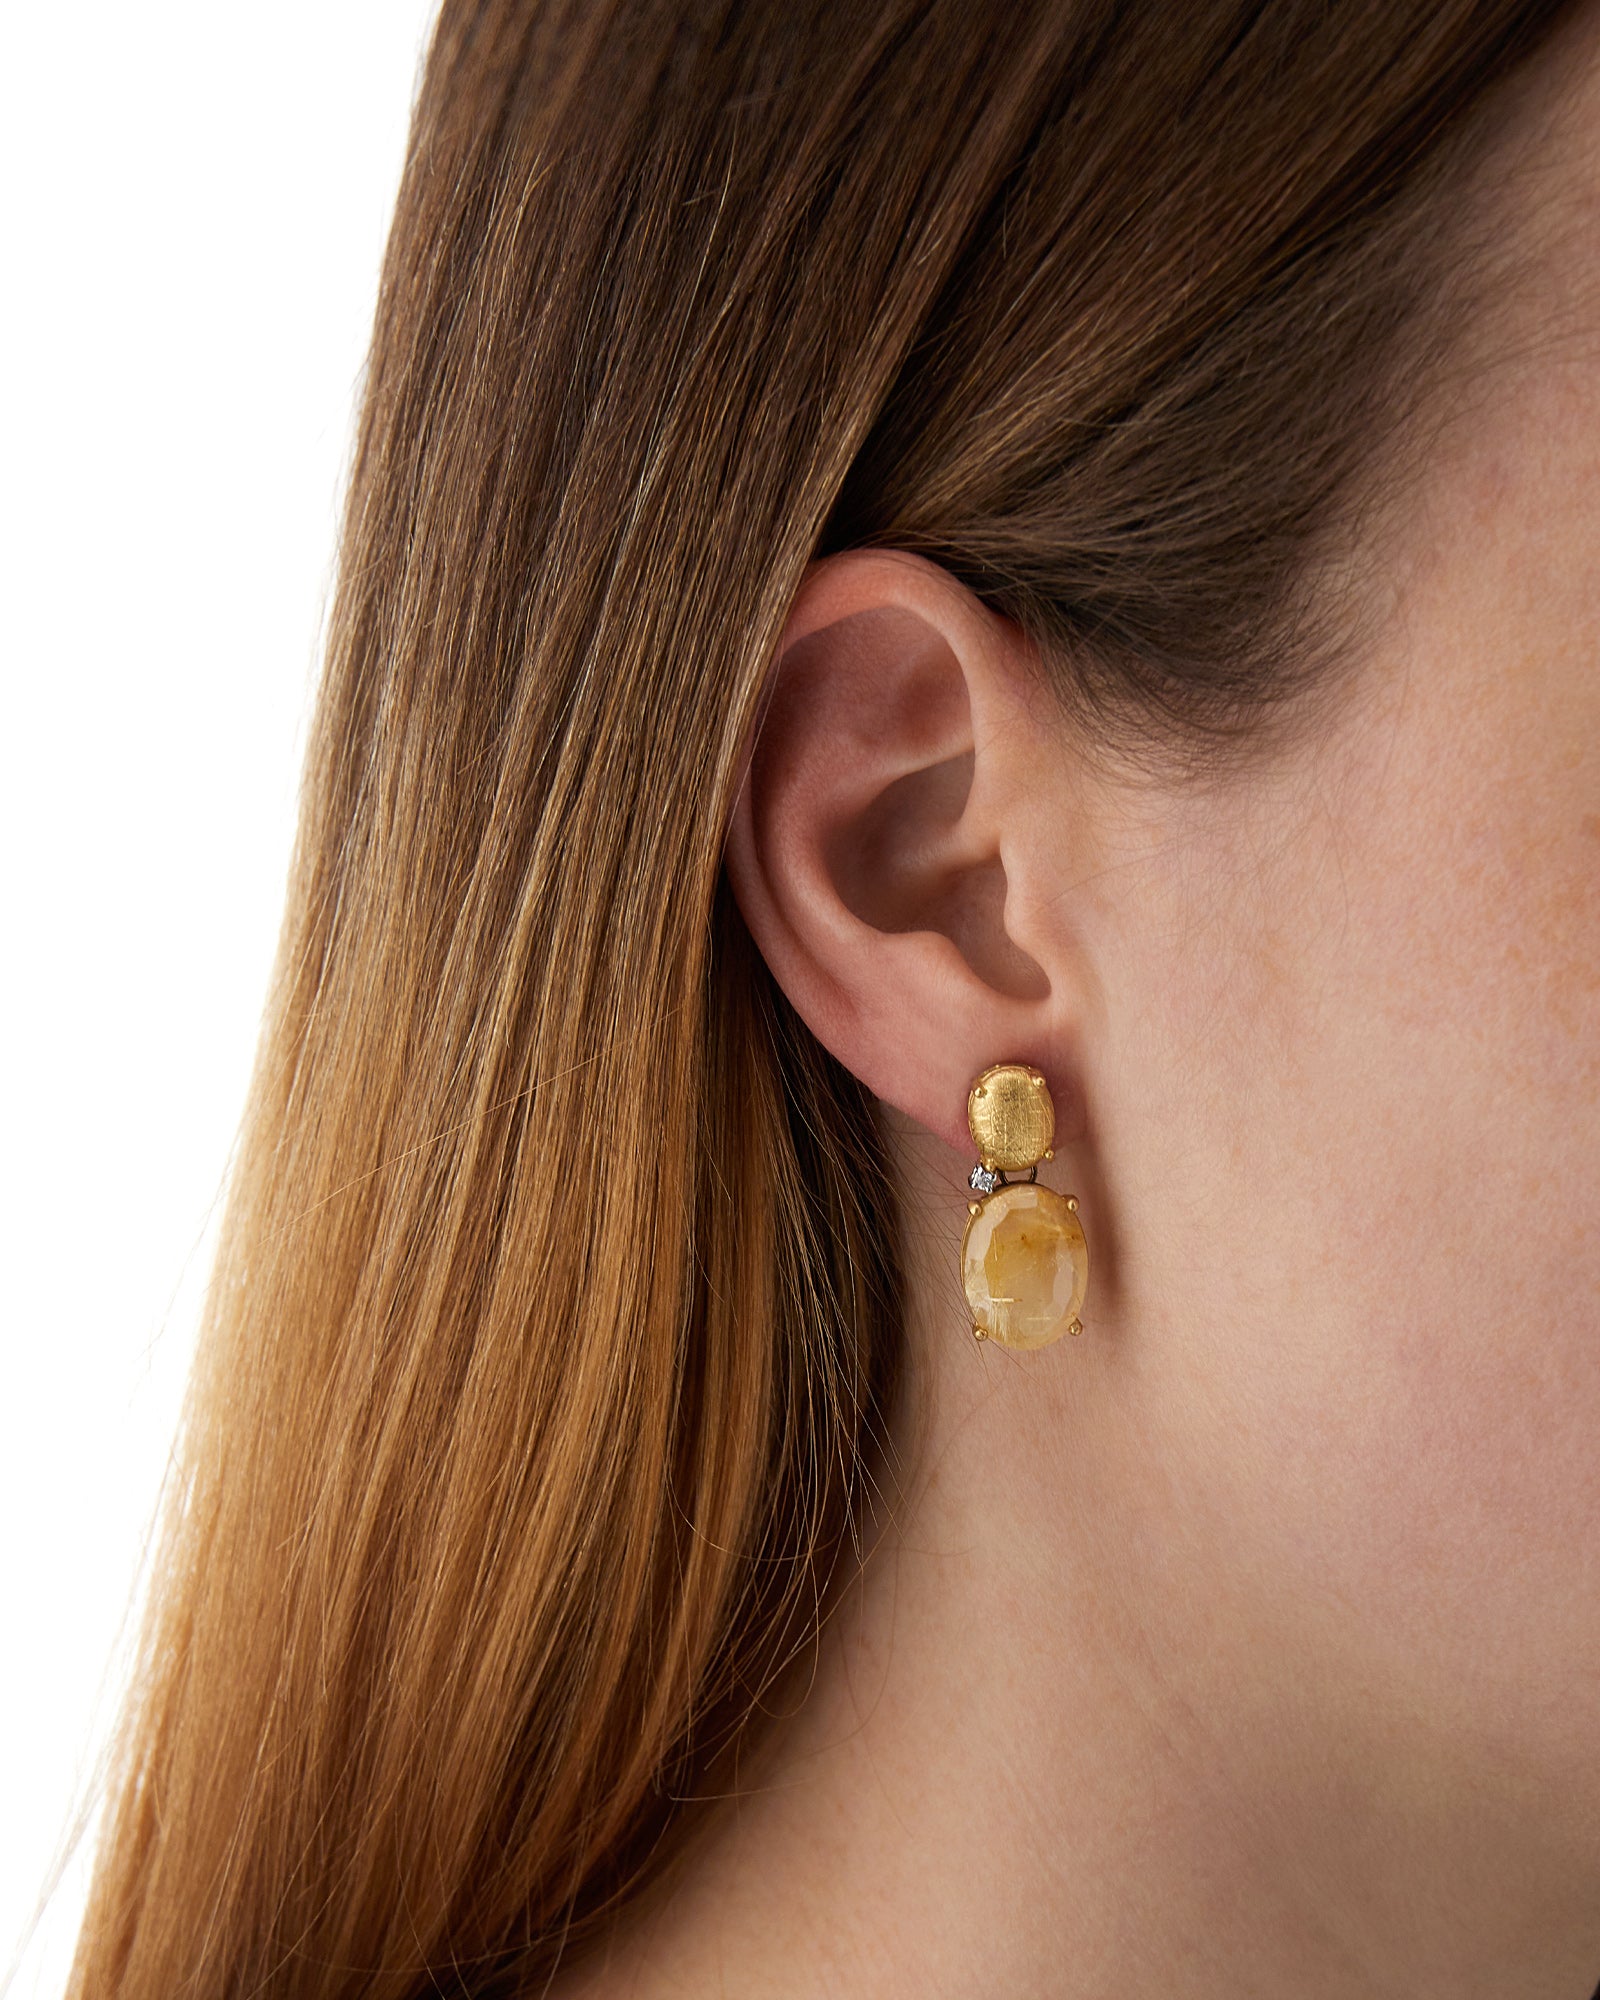 "Ipanema" yellow rutilated quartz earrings